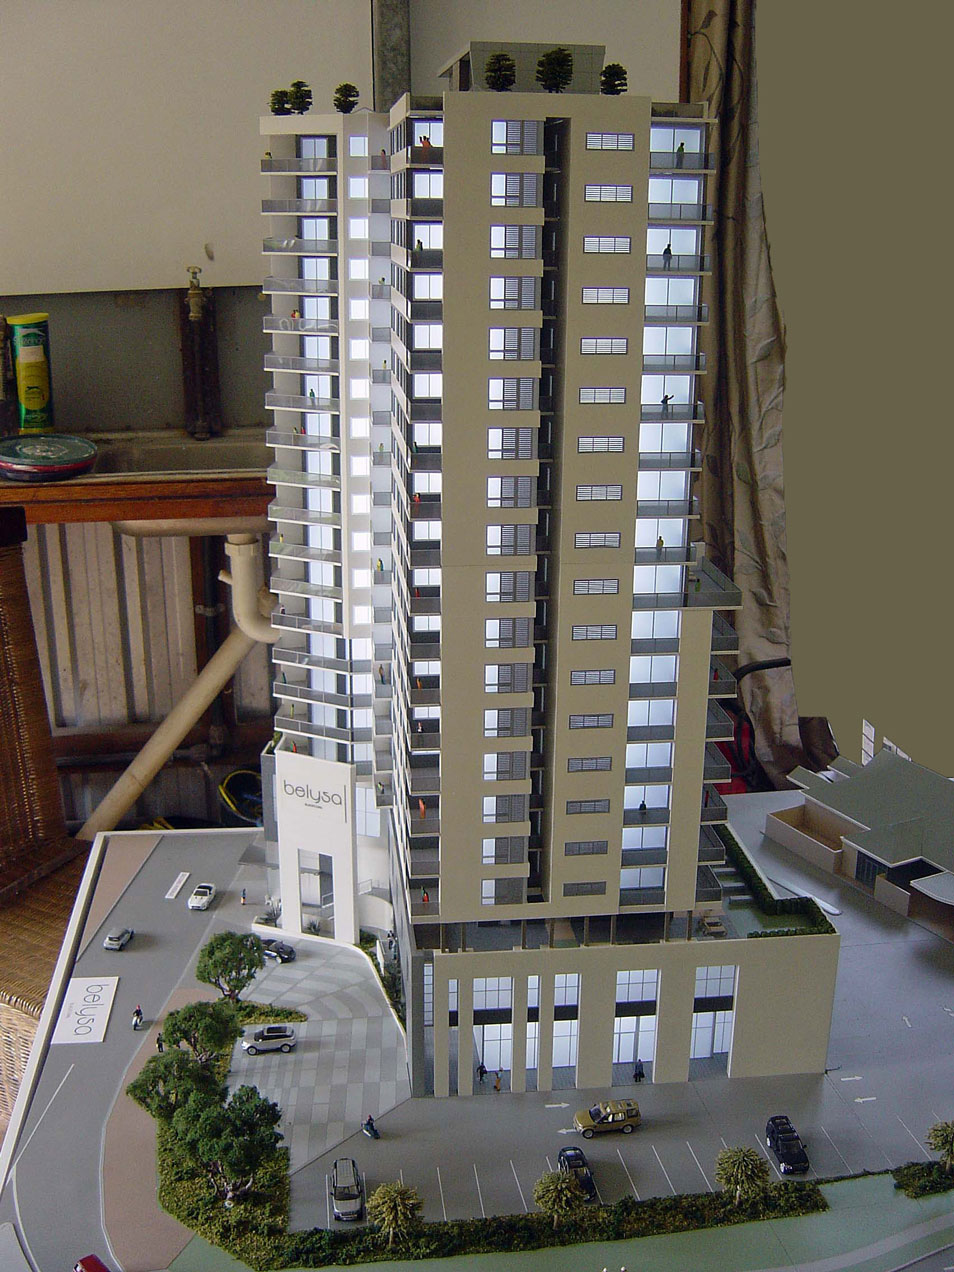 Scale 1-100 George Street Apartments, Sydney